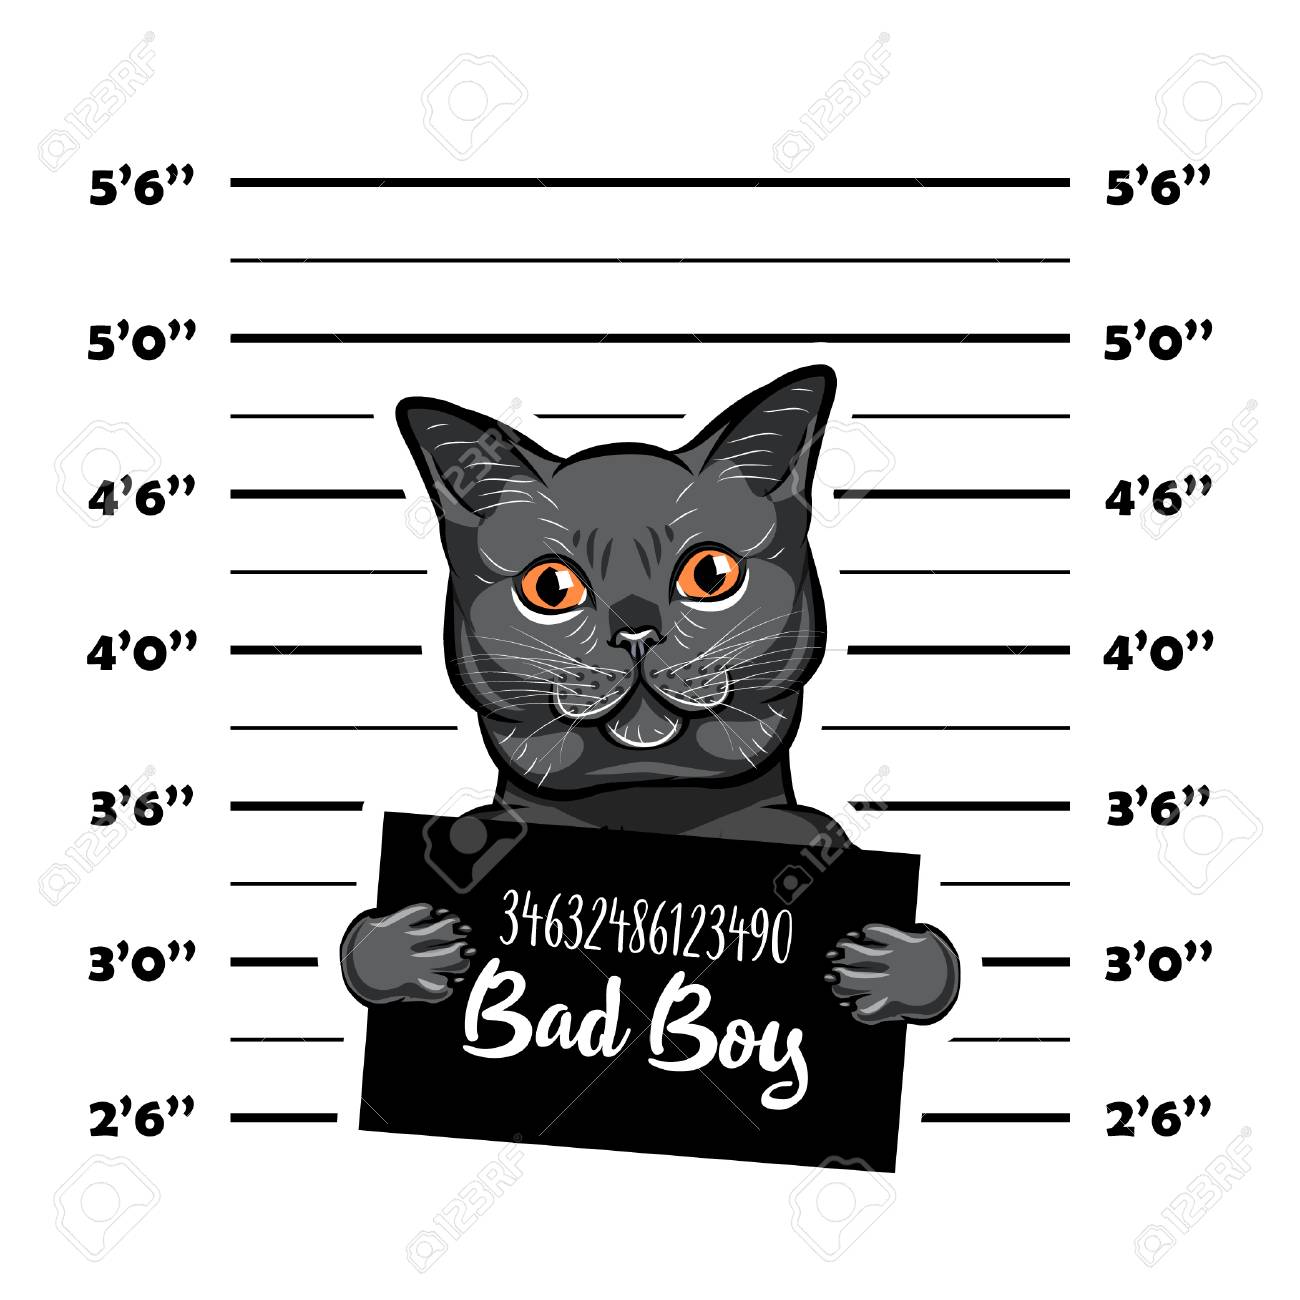 Gray Cat Bad Boy Criminal Arrest Photo Police Records